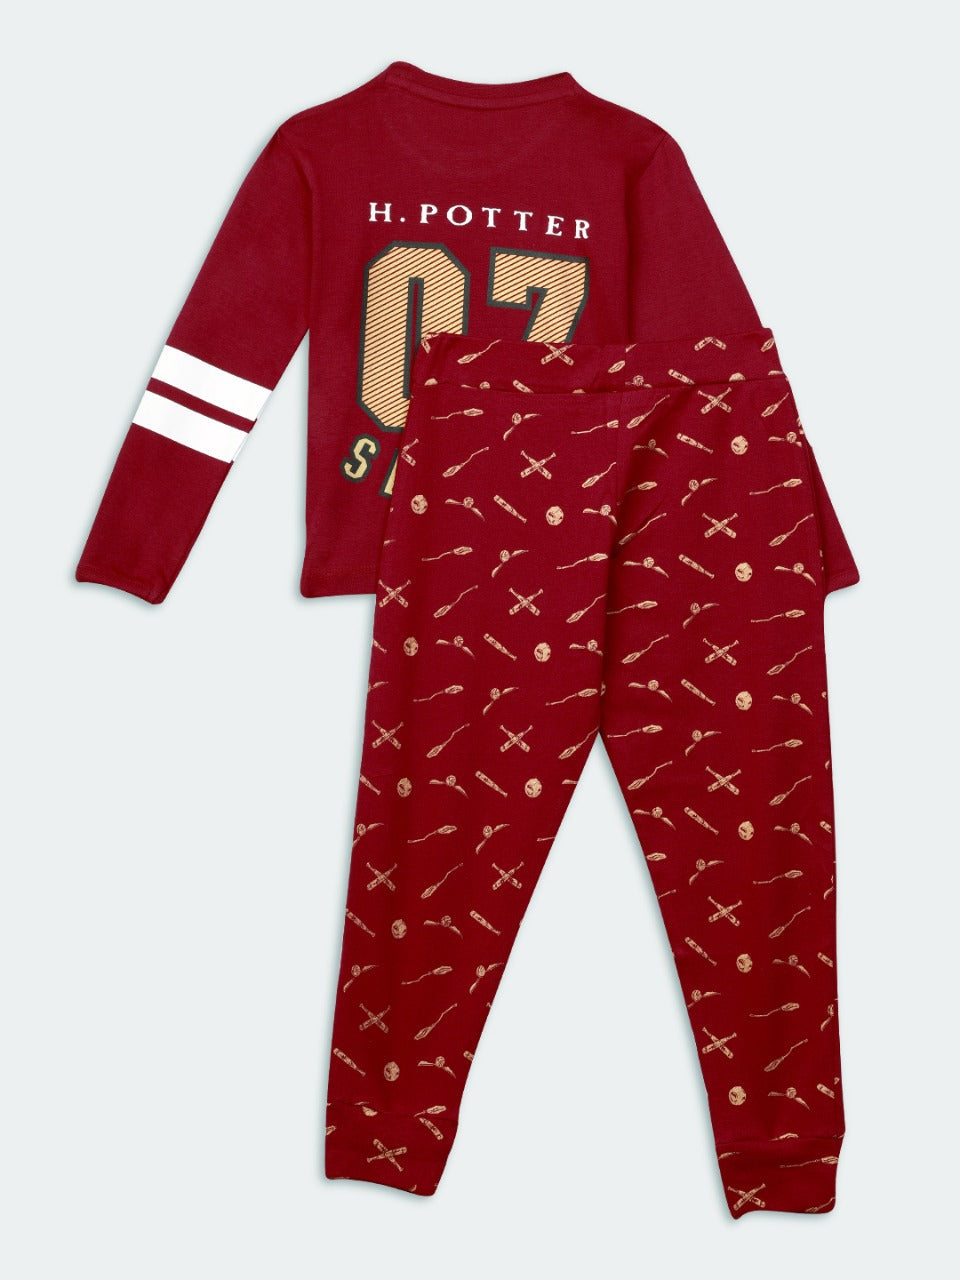 harry potter pyjamas